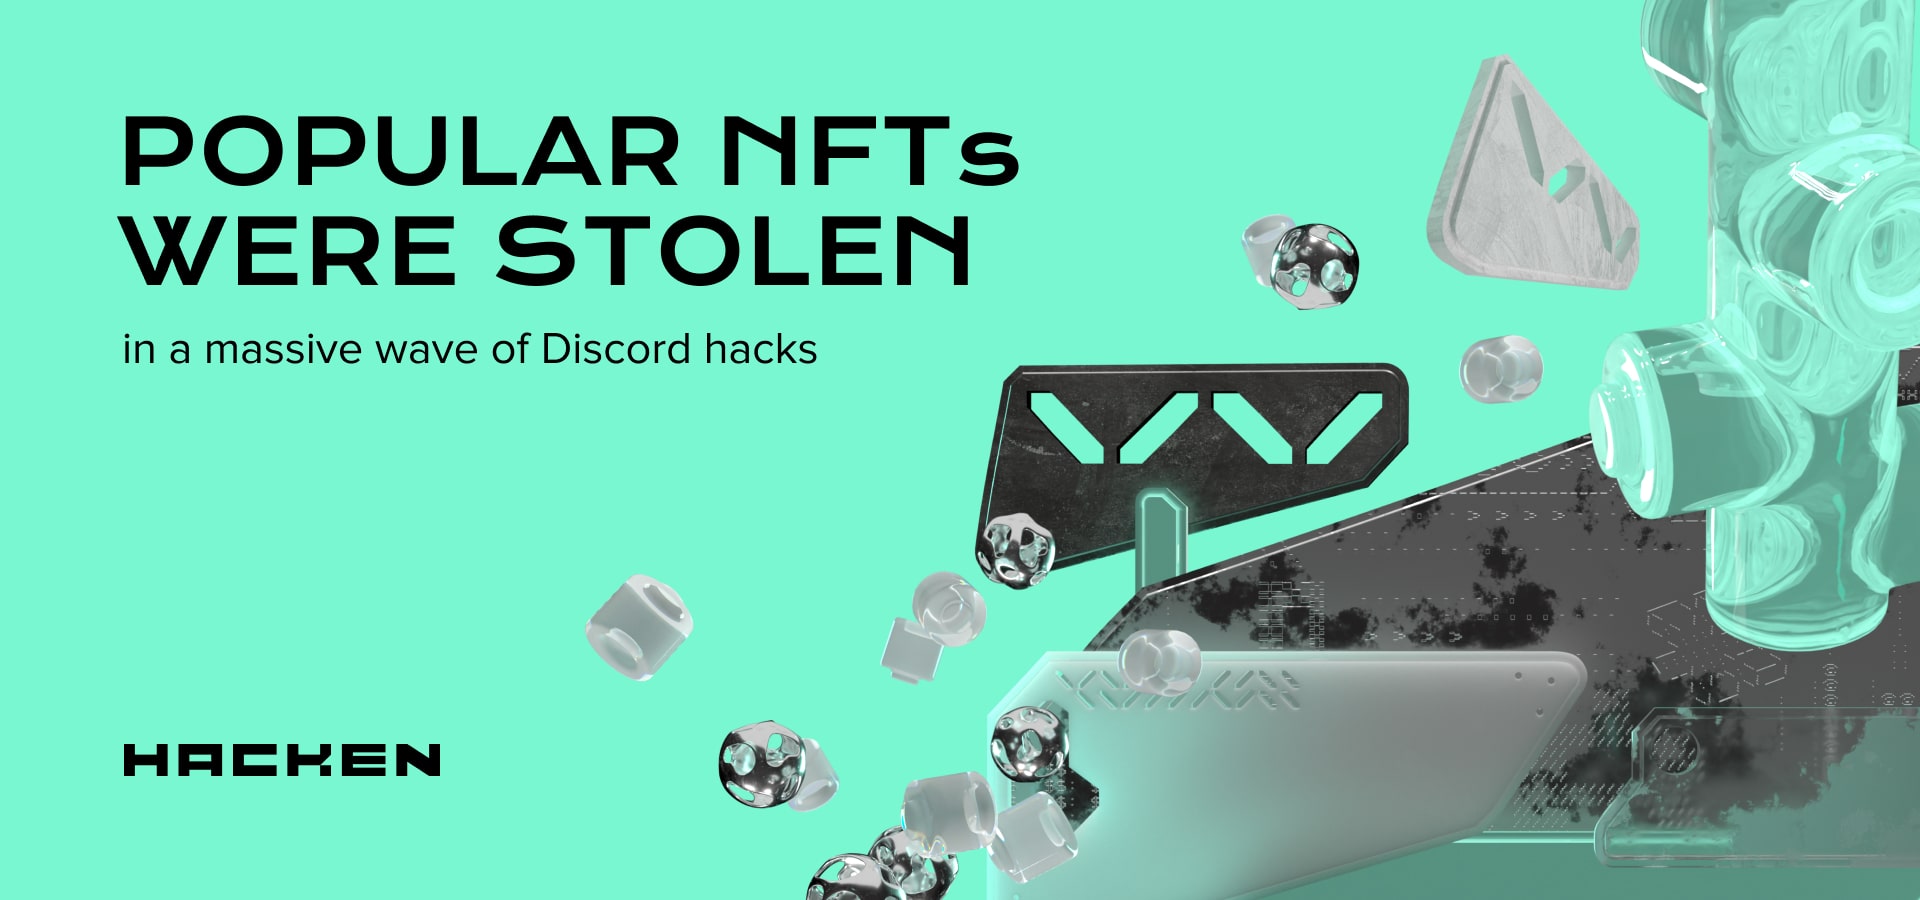 Popular NFTs were stolen in a massive wave of Discord hacks